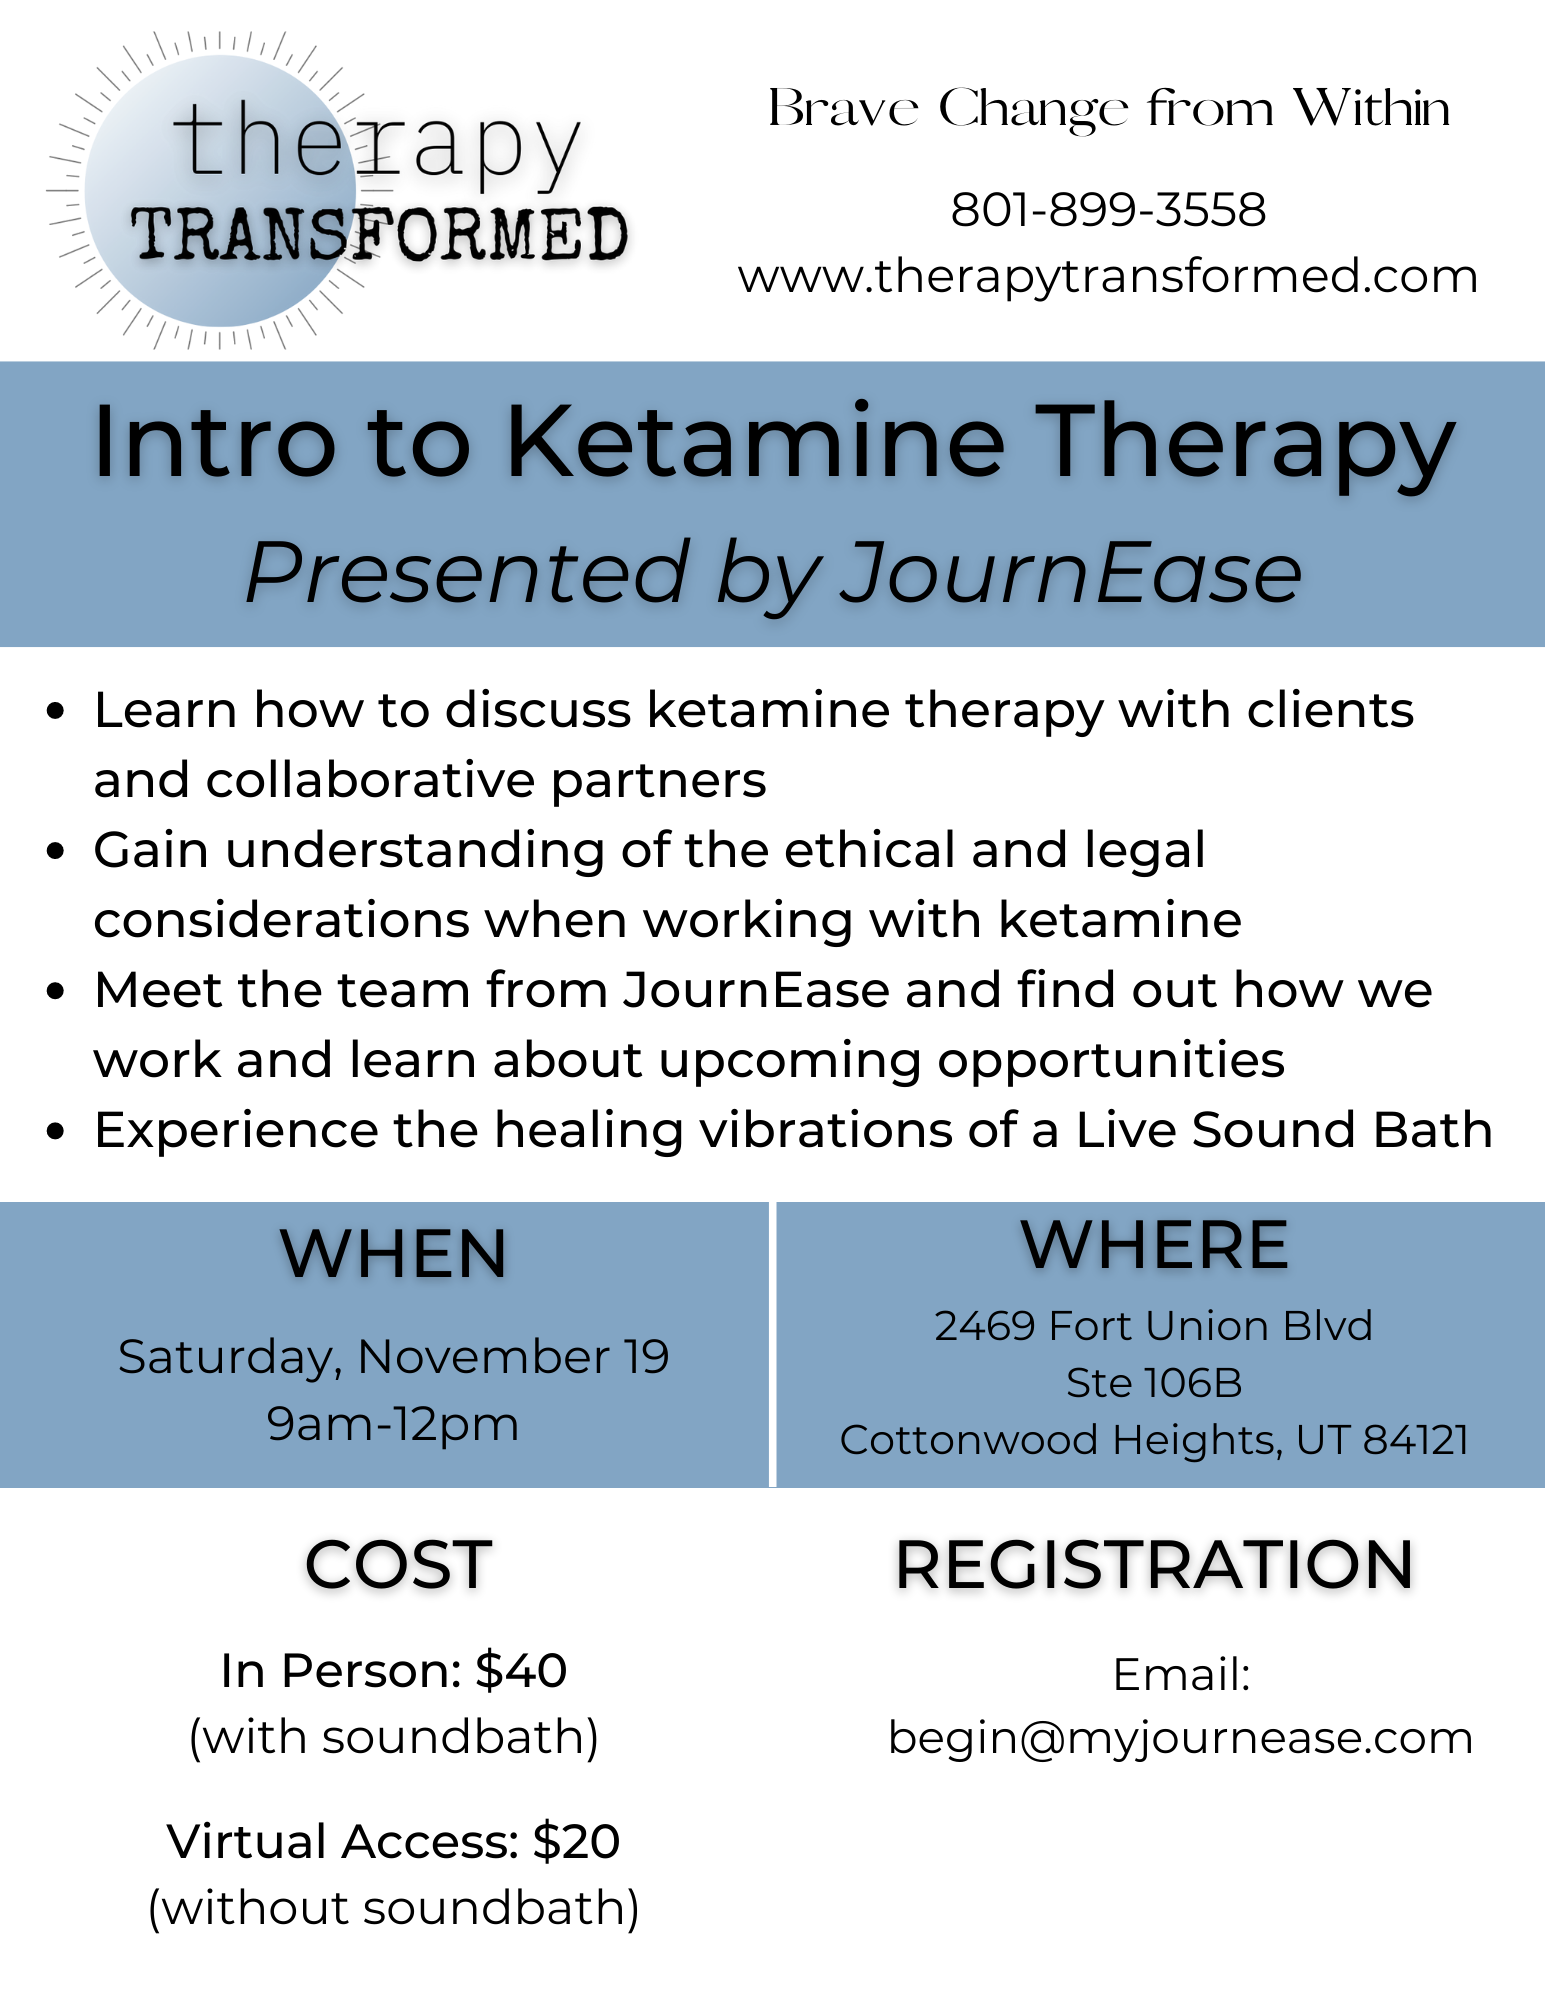 Intro to Ketamine Therapy Event